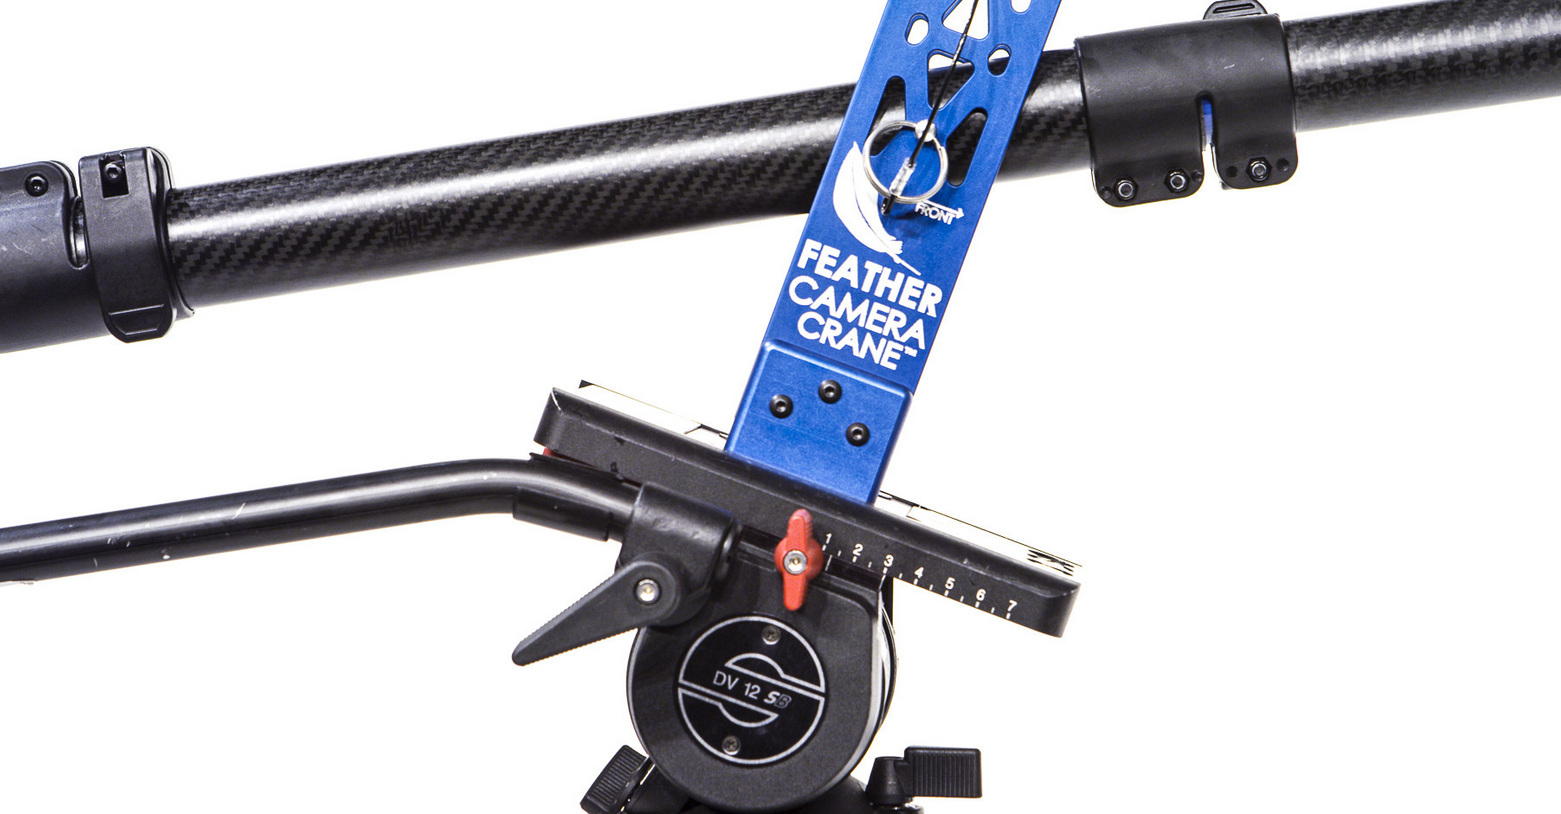 Camera Accessories Online, Feather Camera Crane, Camera Boom - Lite Pro  Gear